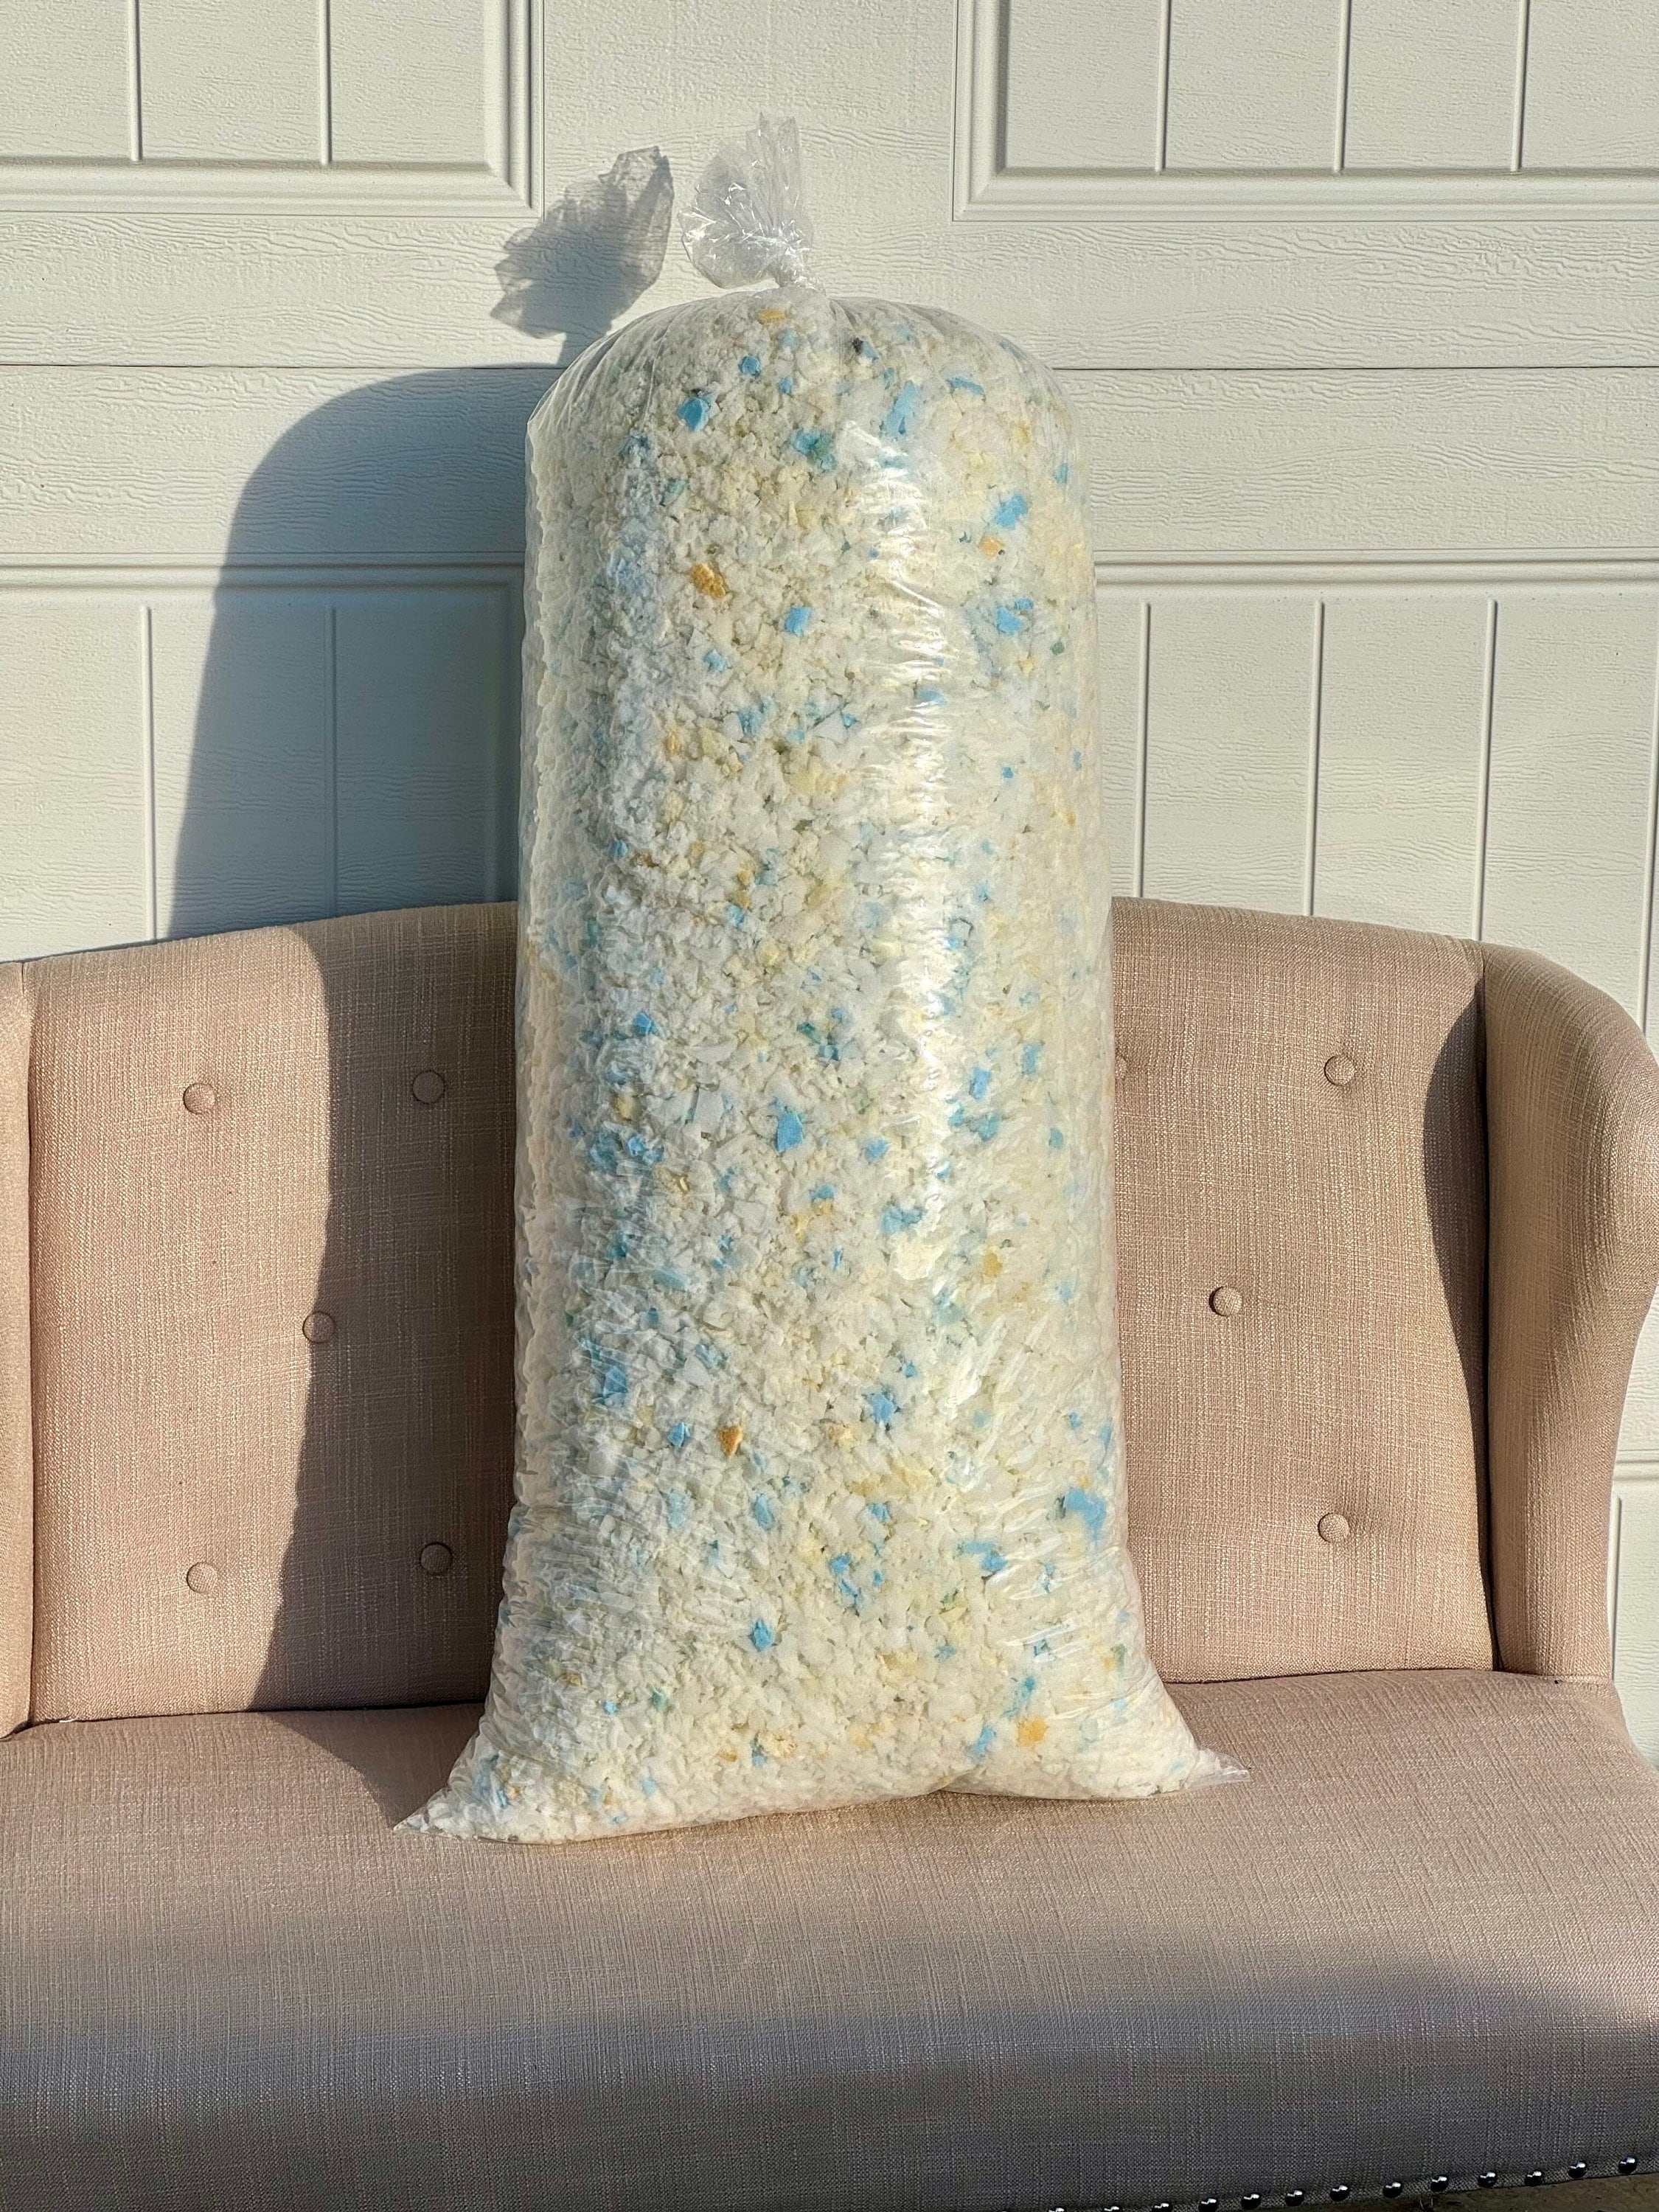 Eurotex Bean Bag Filler Shredded Memory Foam for Pillow Stuffing, Couch  Pillows, Cushions ( lbs 10)